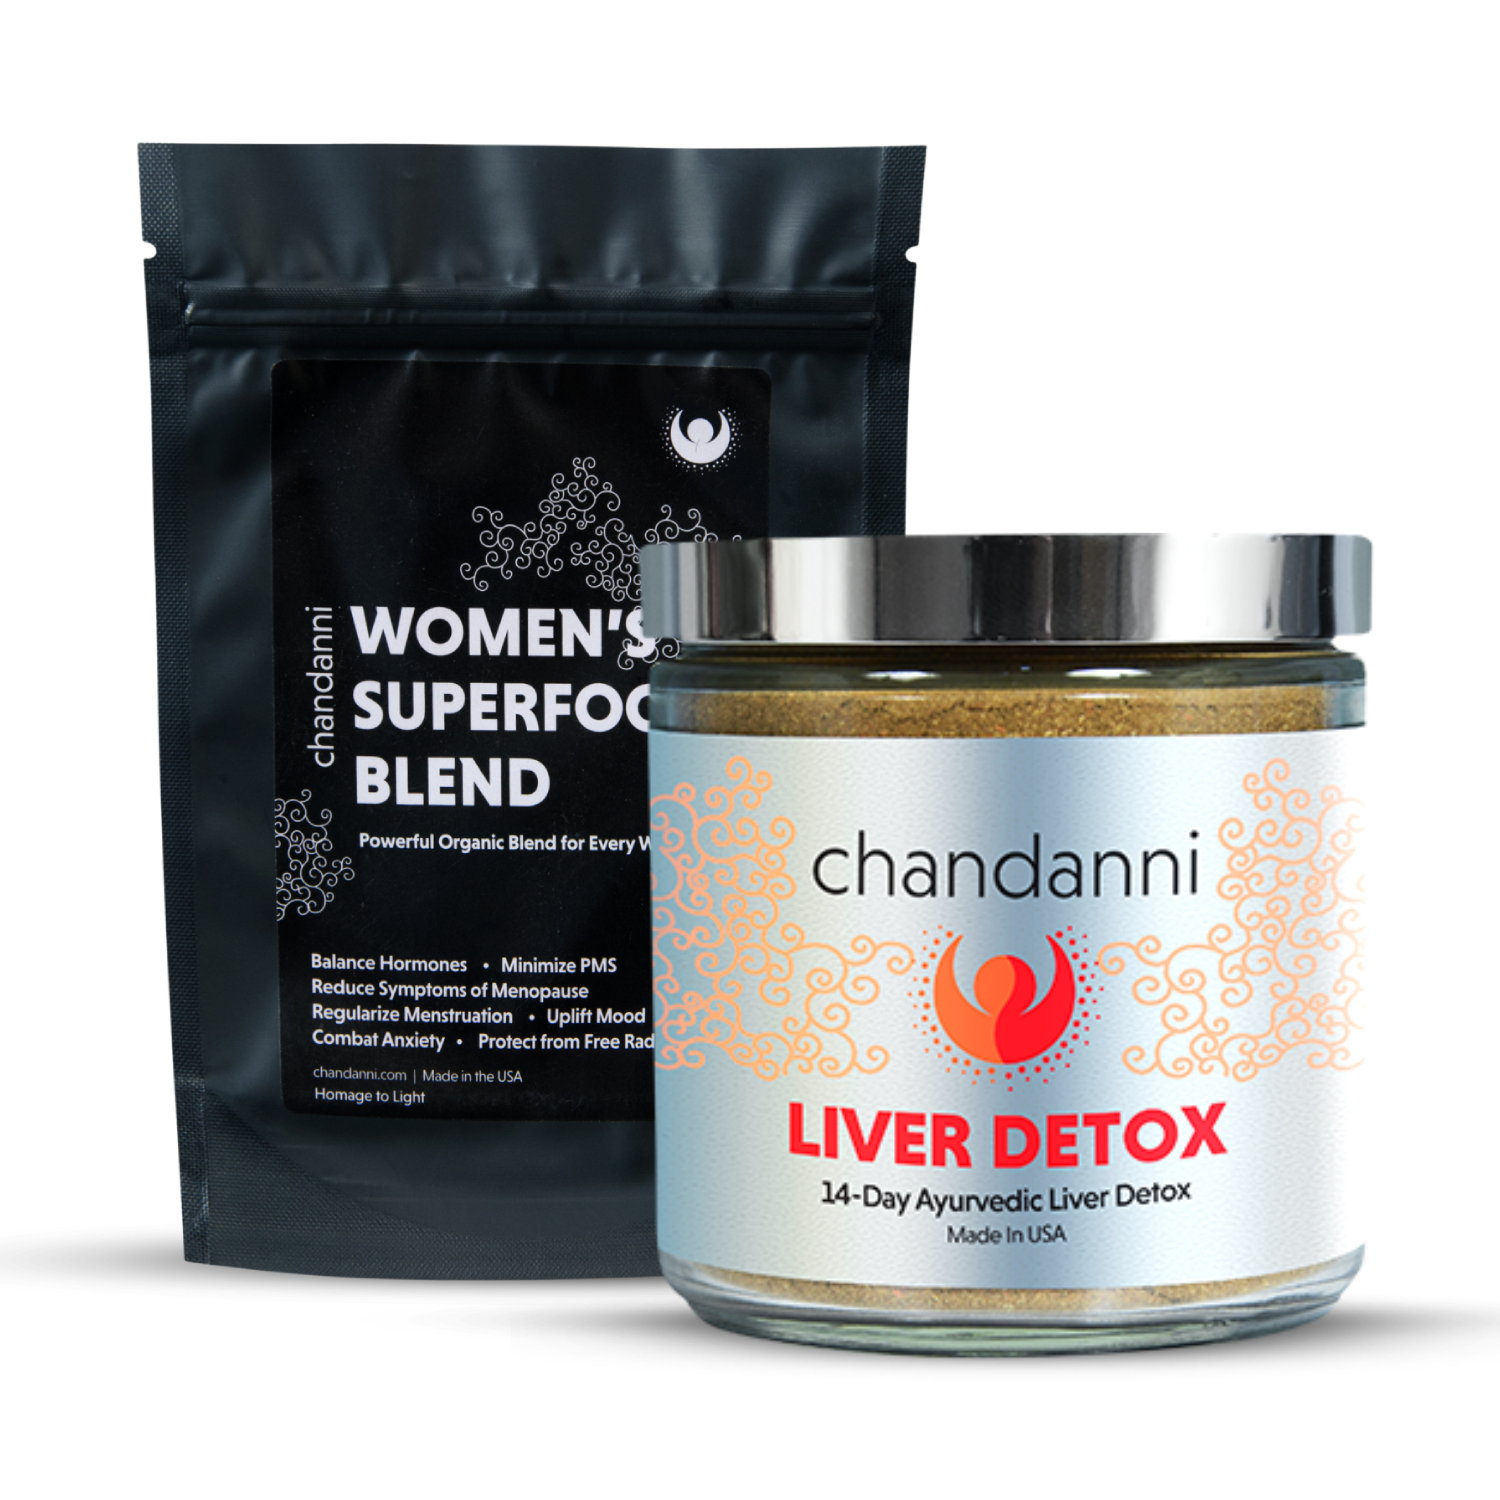 Liver Detox and Women’s Superfood blend bundle